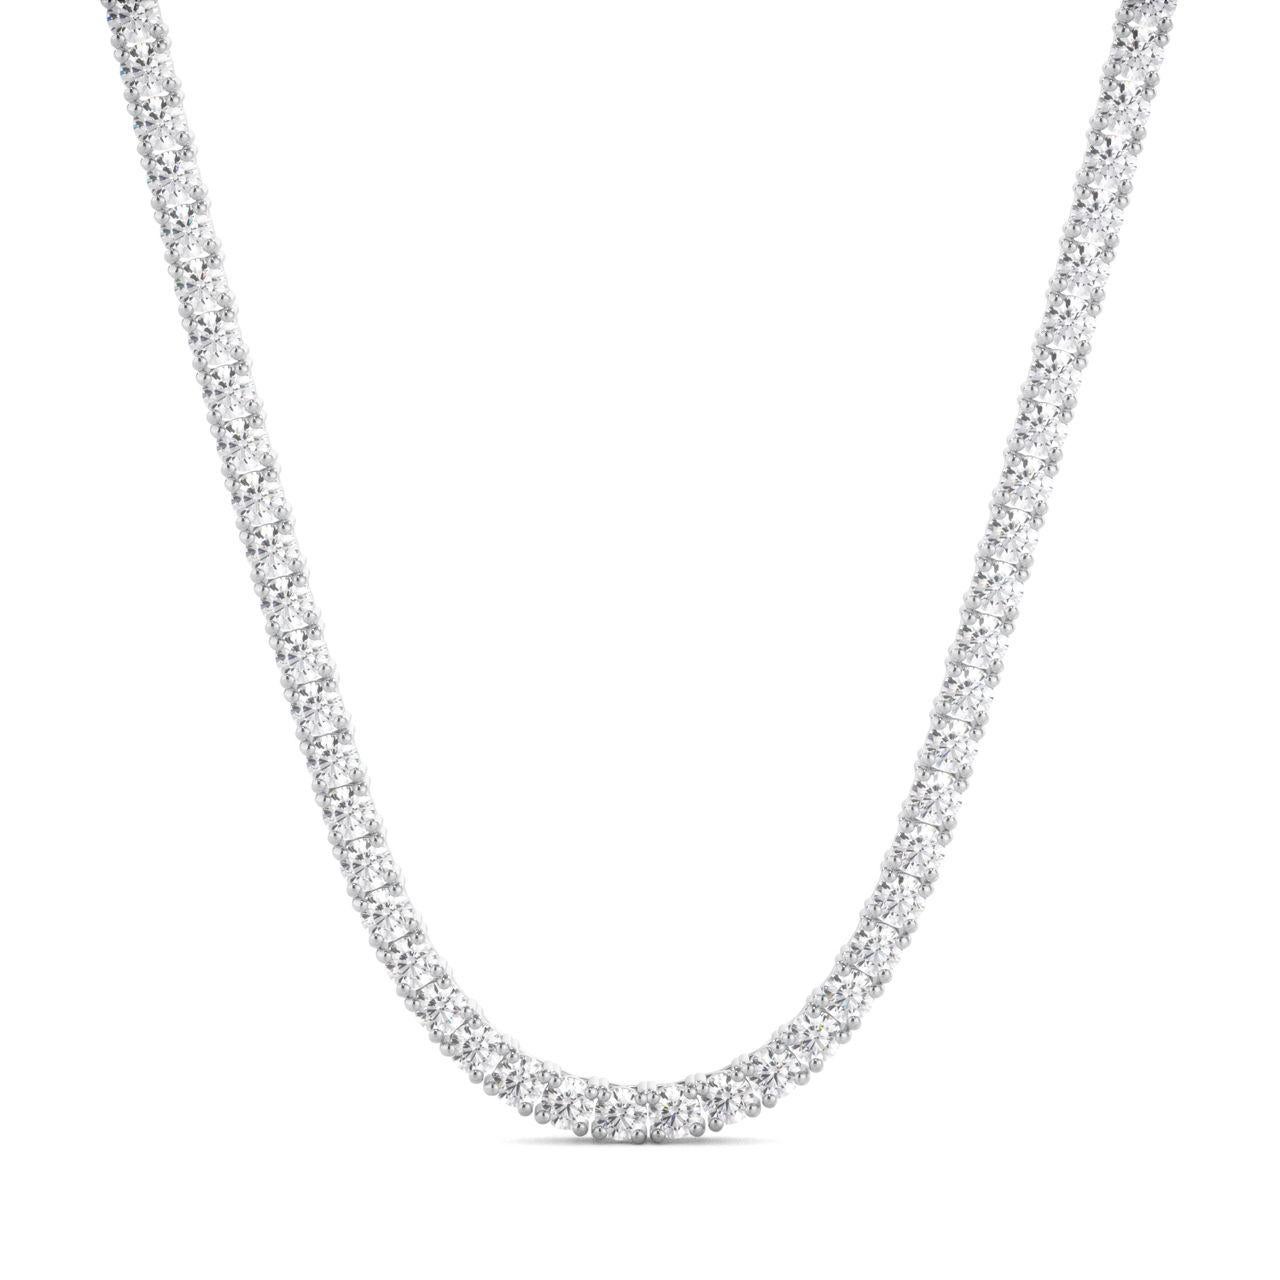 10 carat tennis necklace